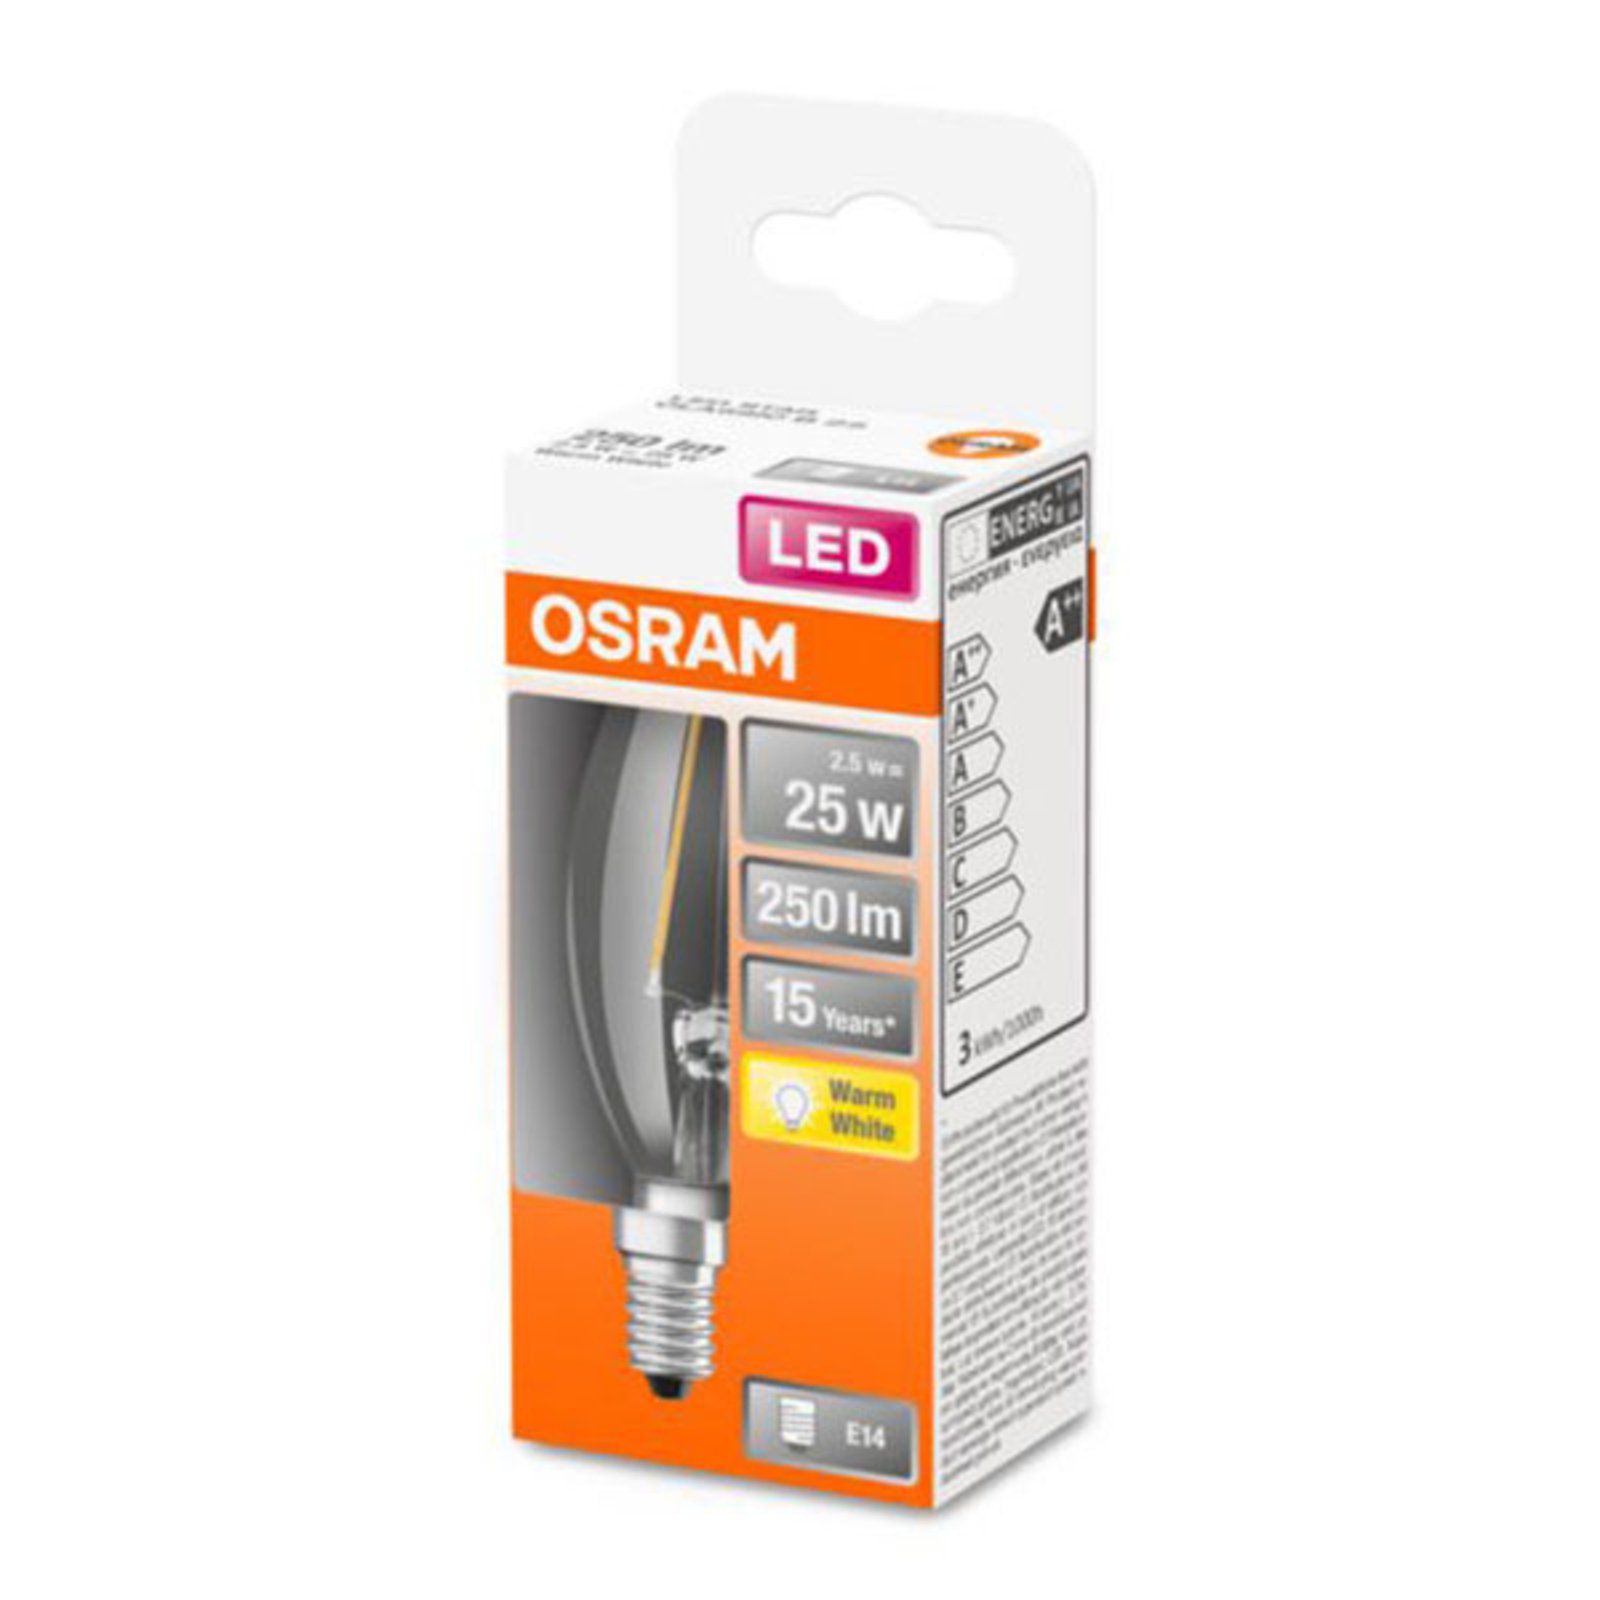 OSRAM Classic B ampoule LED E14 2,5W 2 700K claire